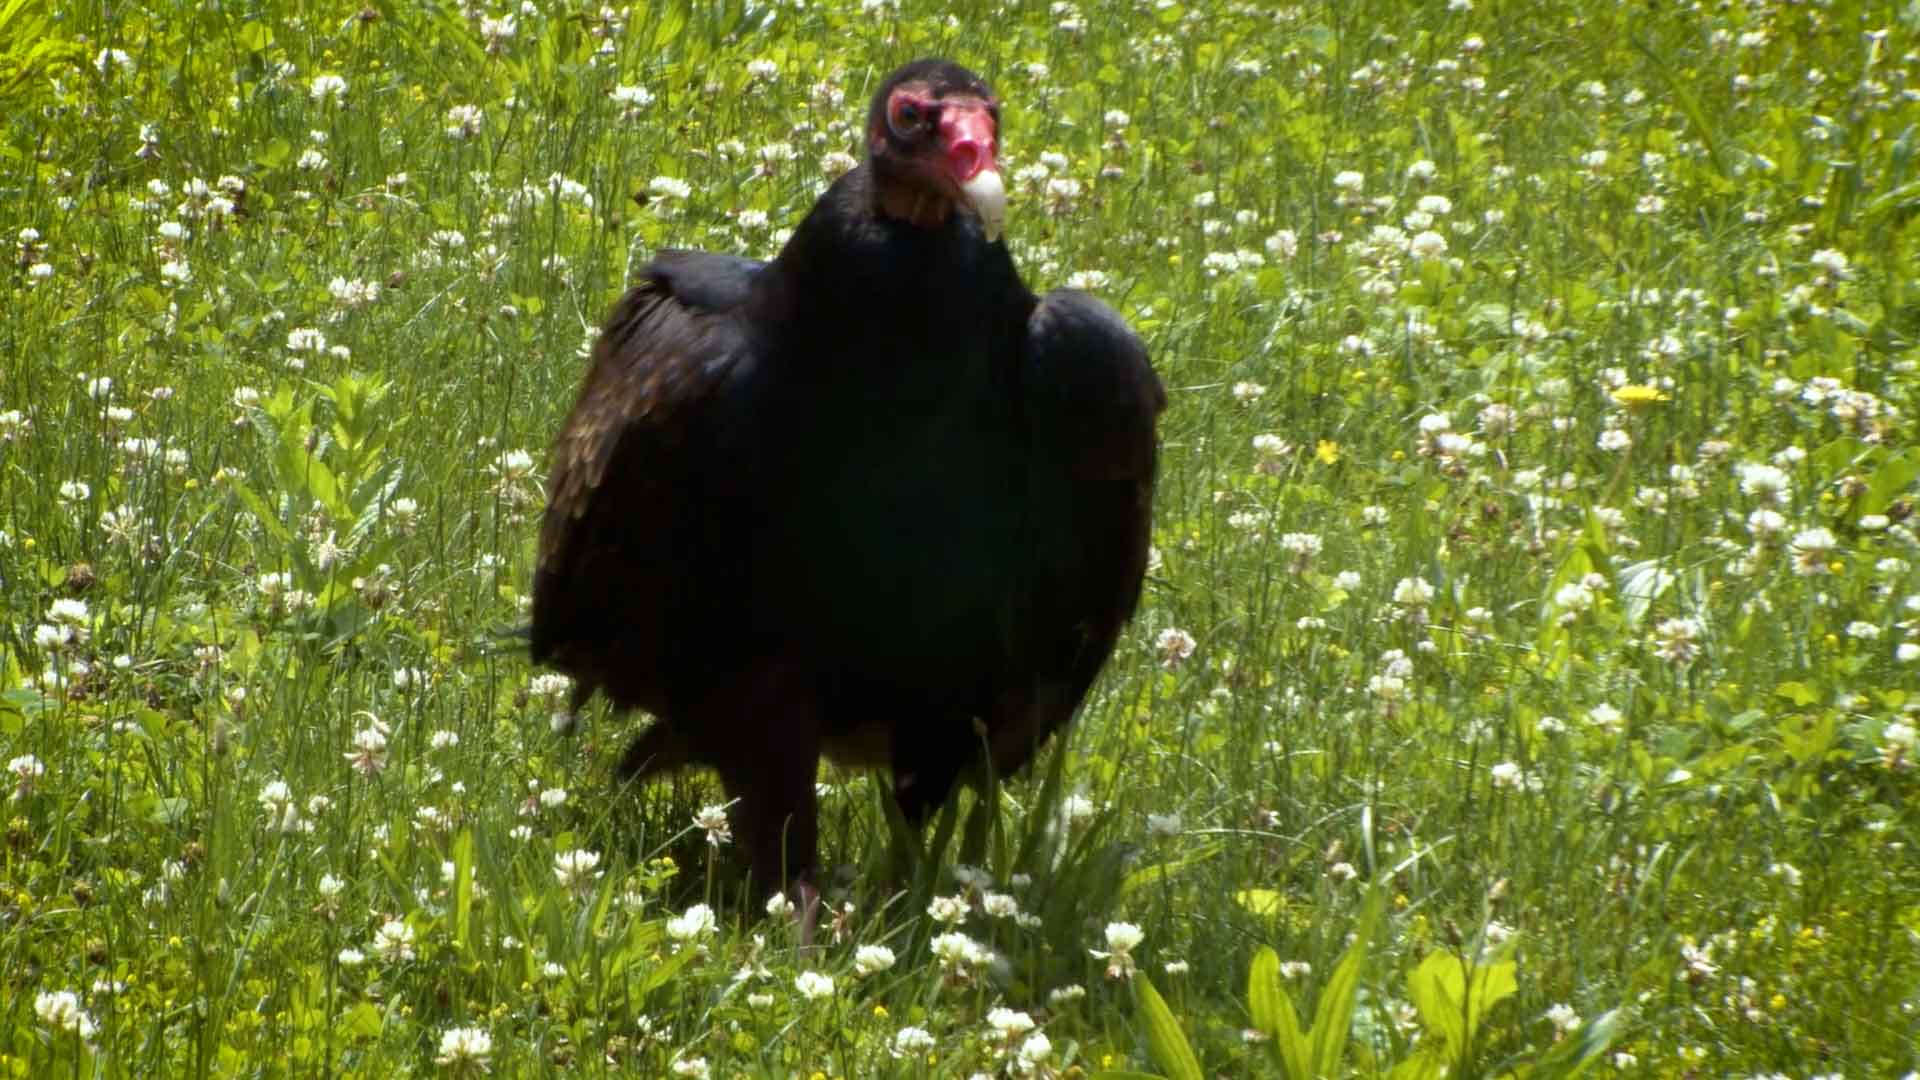 Turkey Buzzard walking in grass